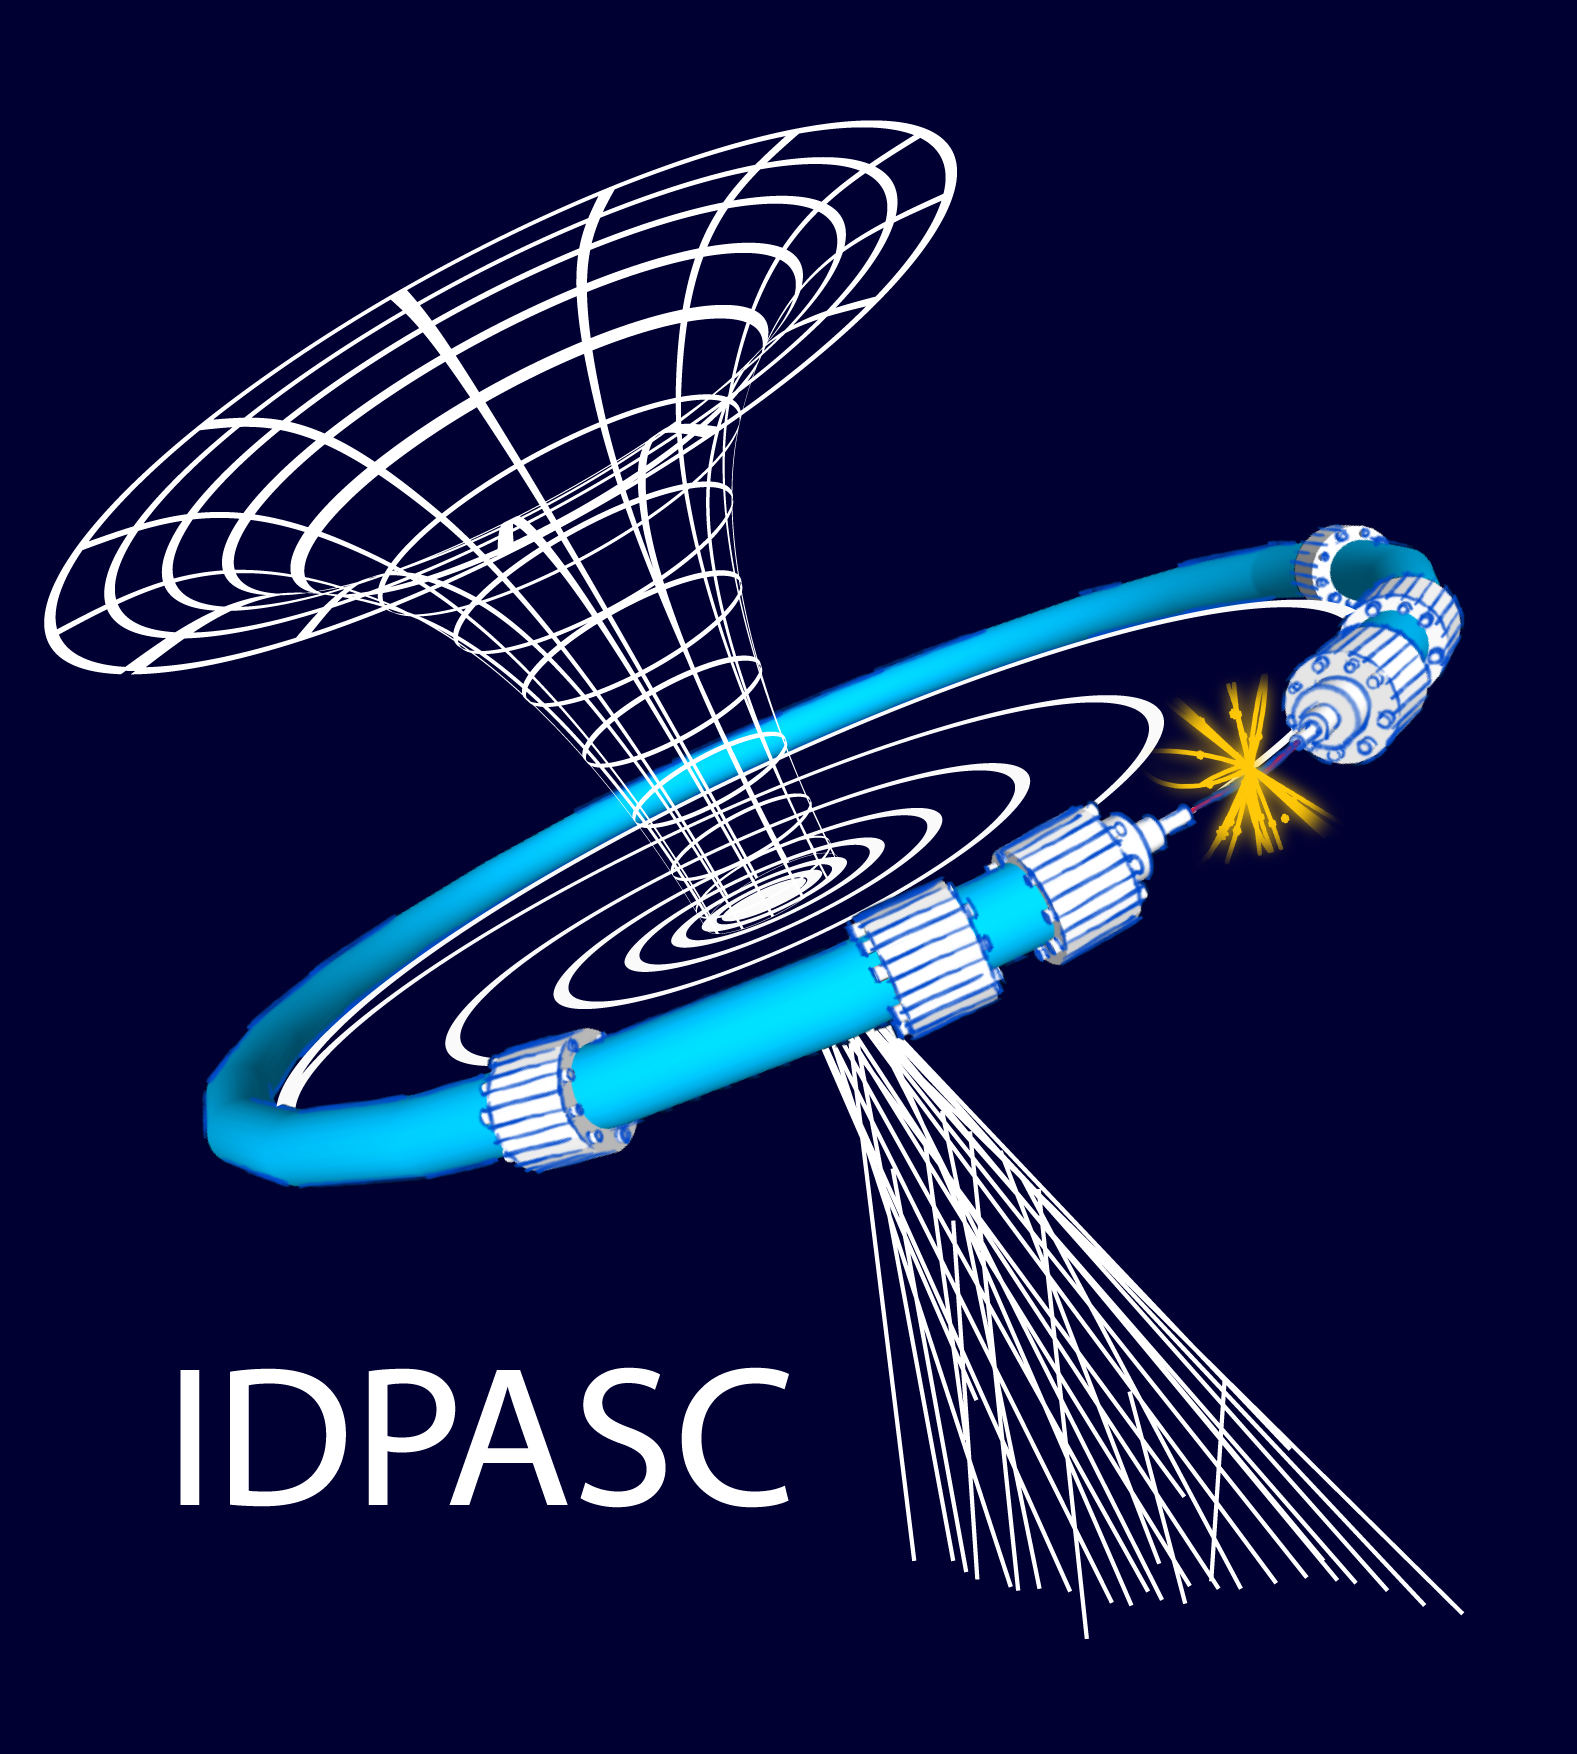 IDPASC